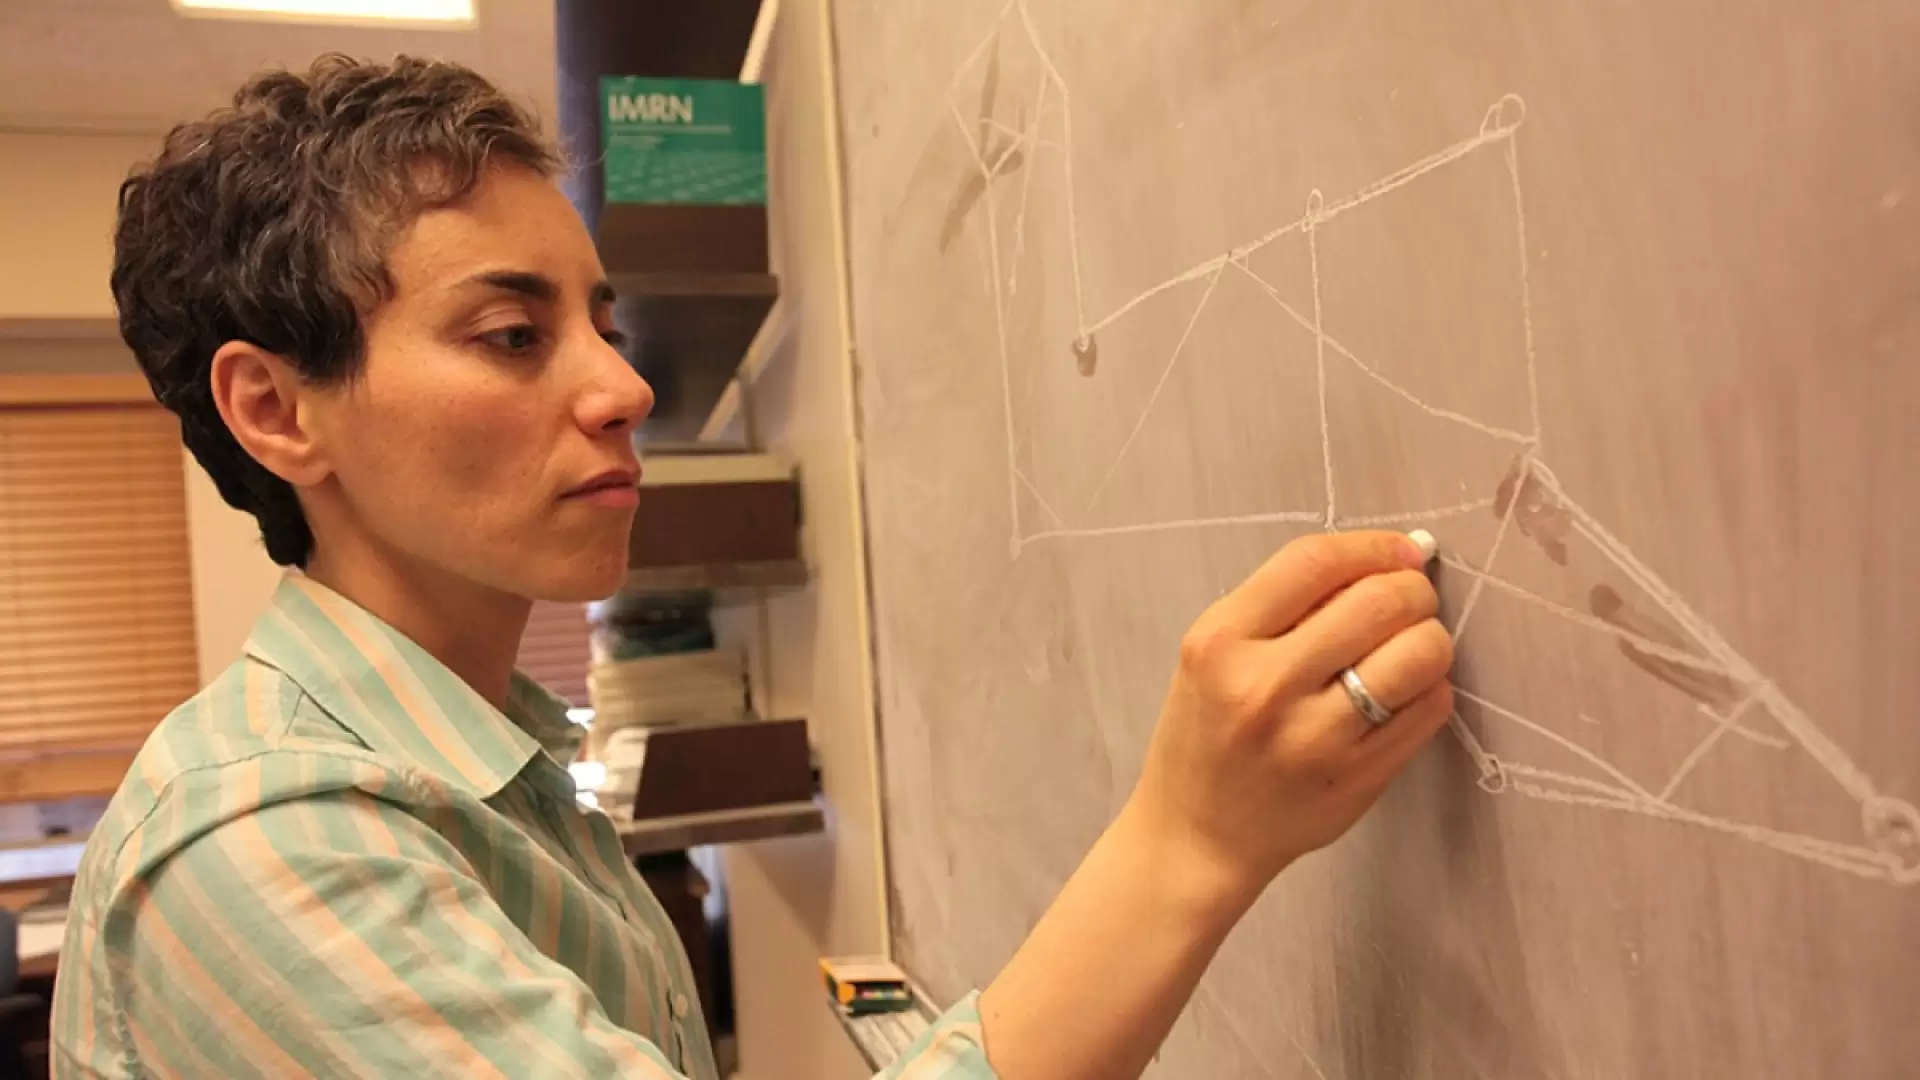 دانلود مستند Secrets of the Surface: The Mathematical Vision of Maryam Mirzakhani 2020 با زیرنویس فارسی و تماشای آنلاین